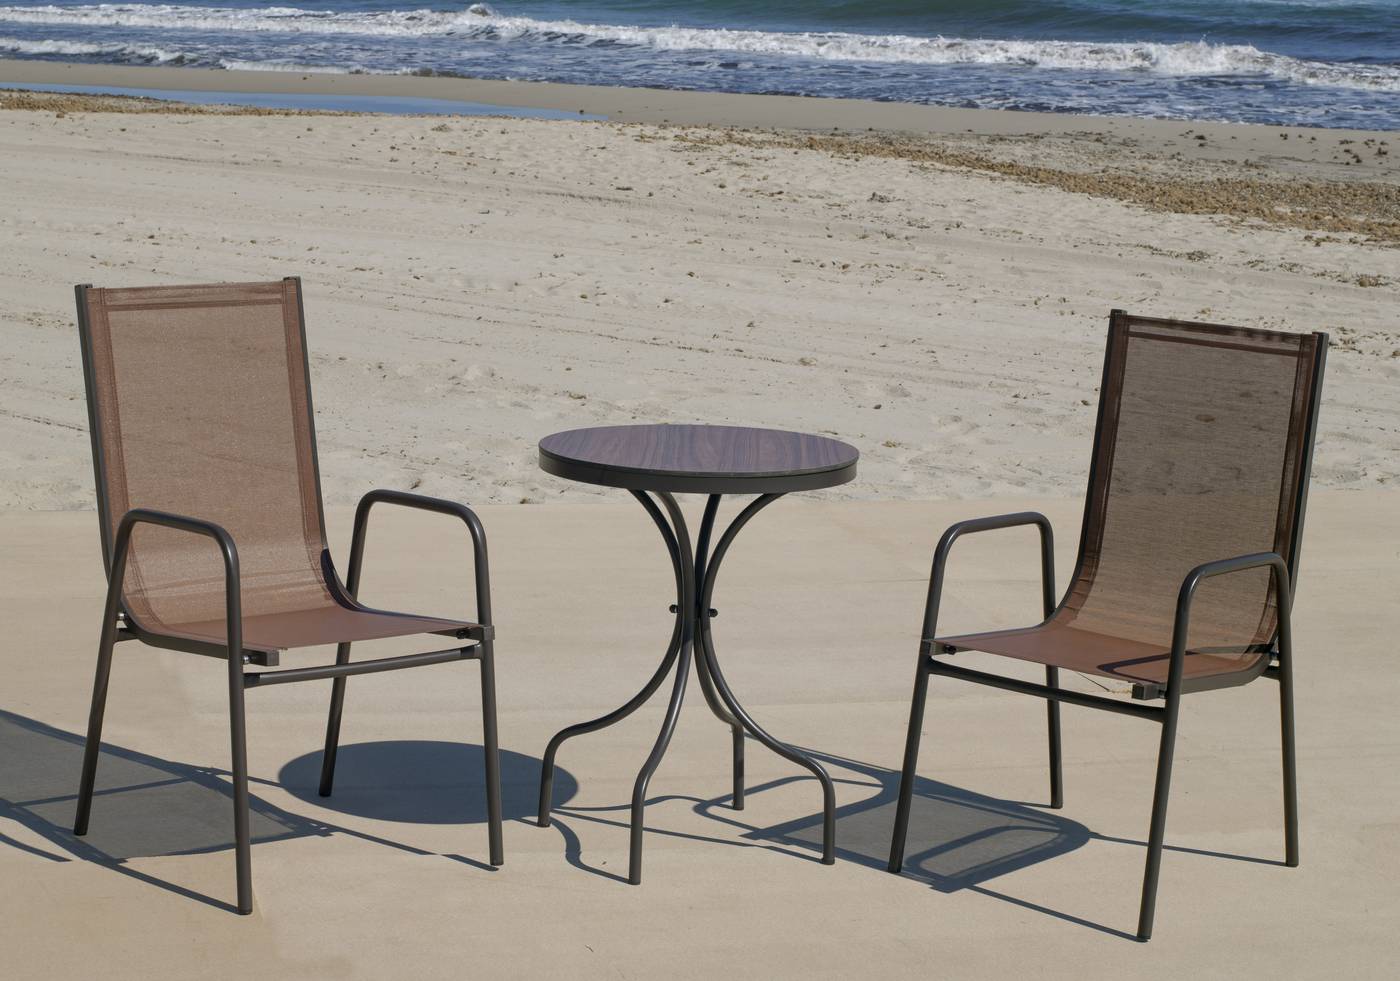 Conjunto aluminio color marrón: Mesa redonda con tablero HPL de 60 cm + 2 sillones de textilen.